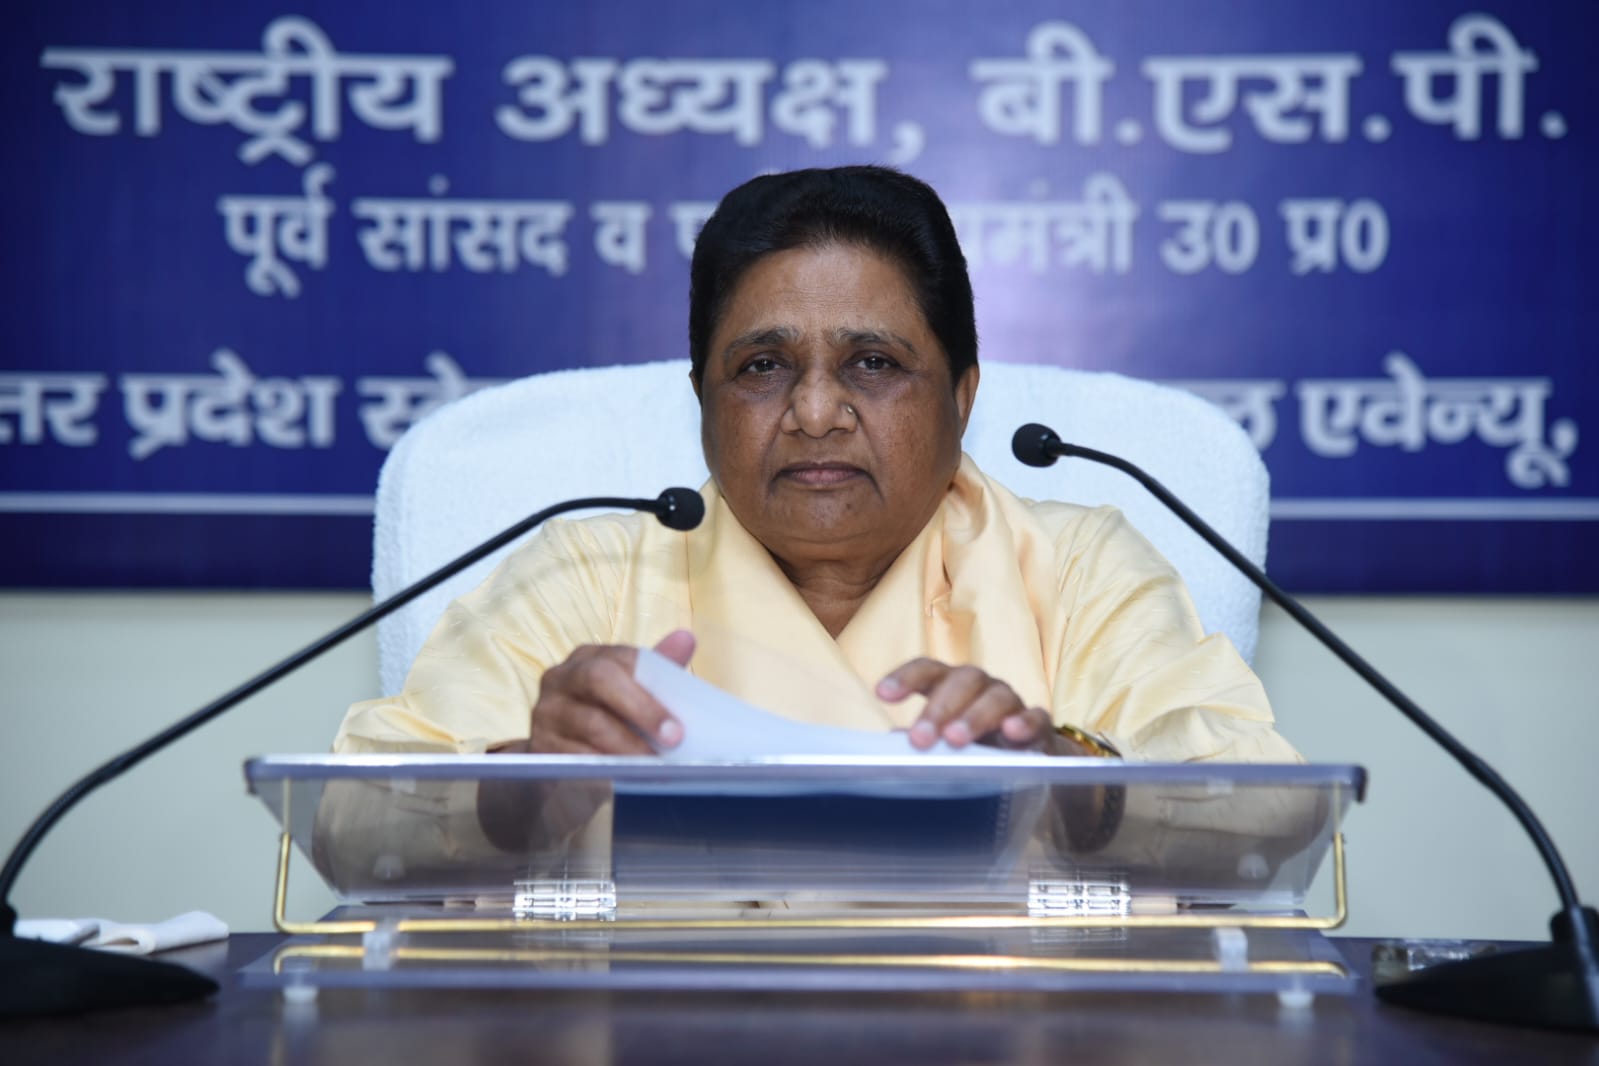 Electoral Bonds: BSP chief Mayawati's statement on the Electoral Bond case, praised the Supreme Court